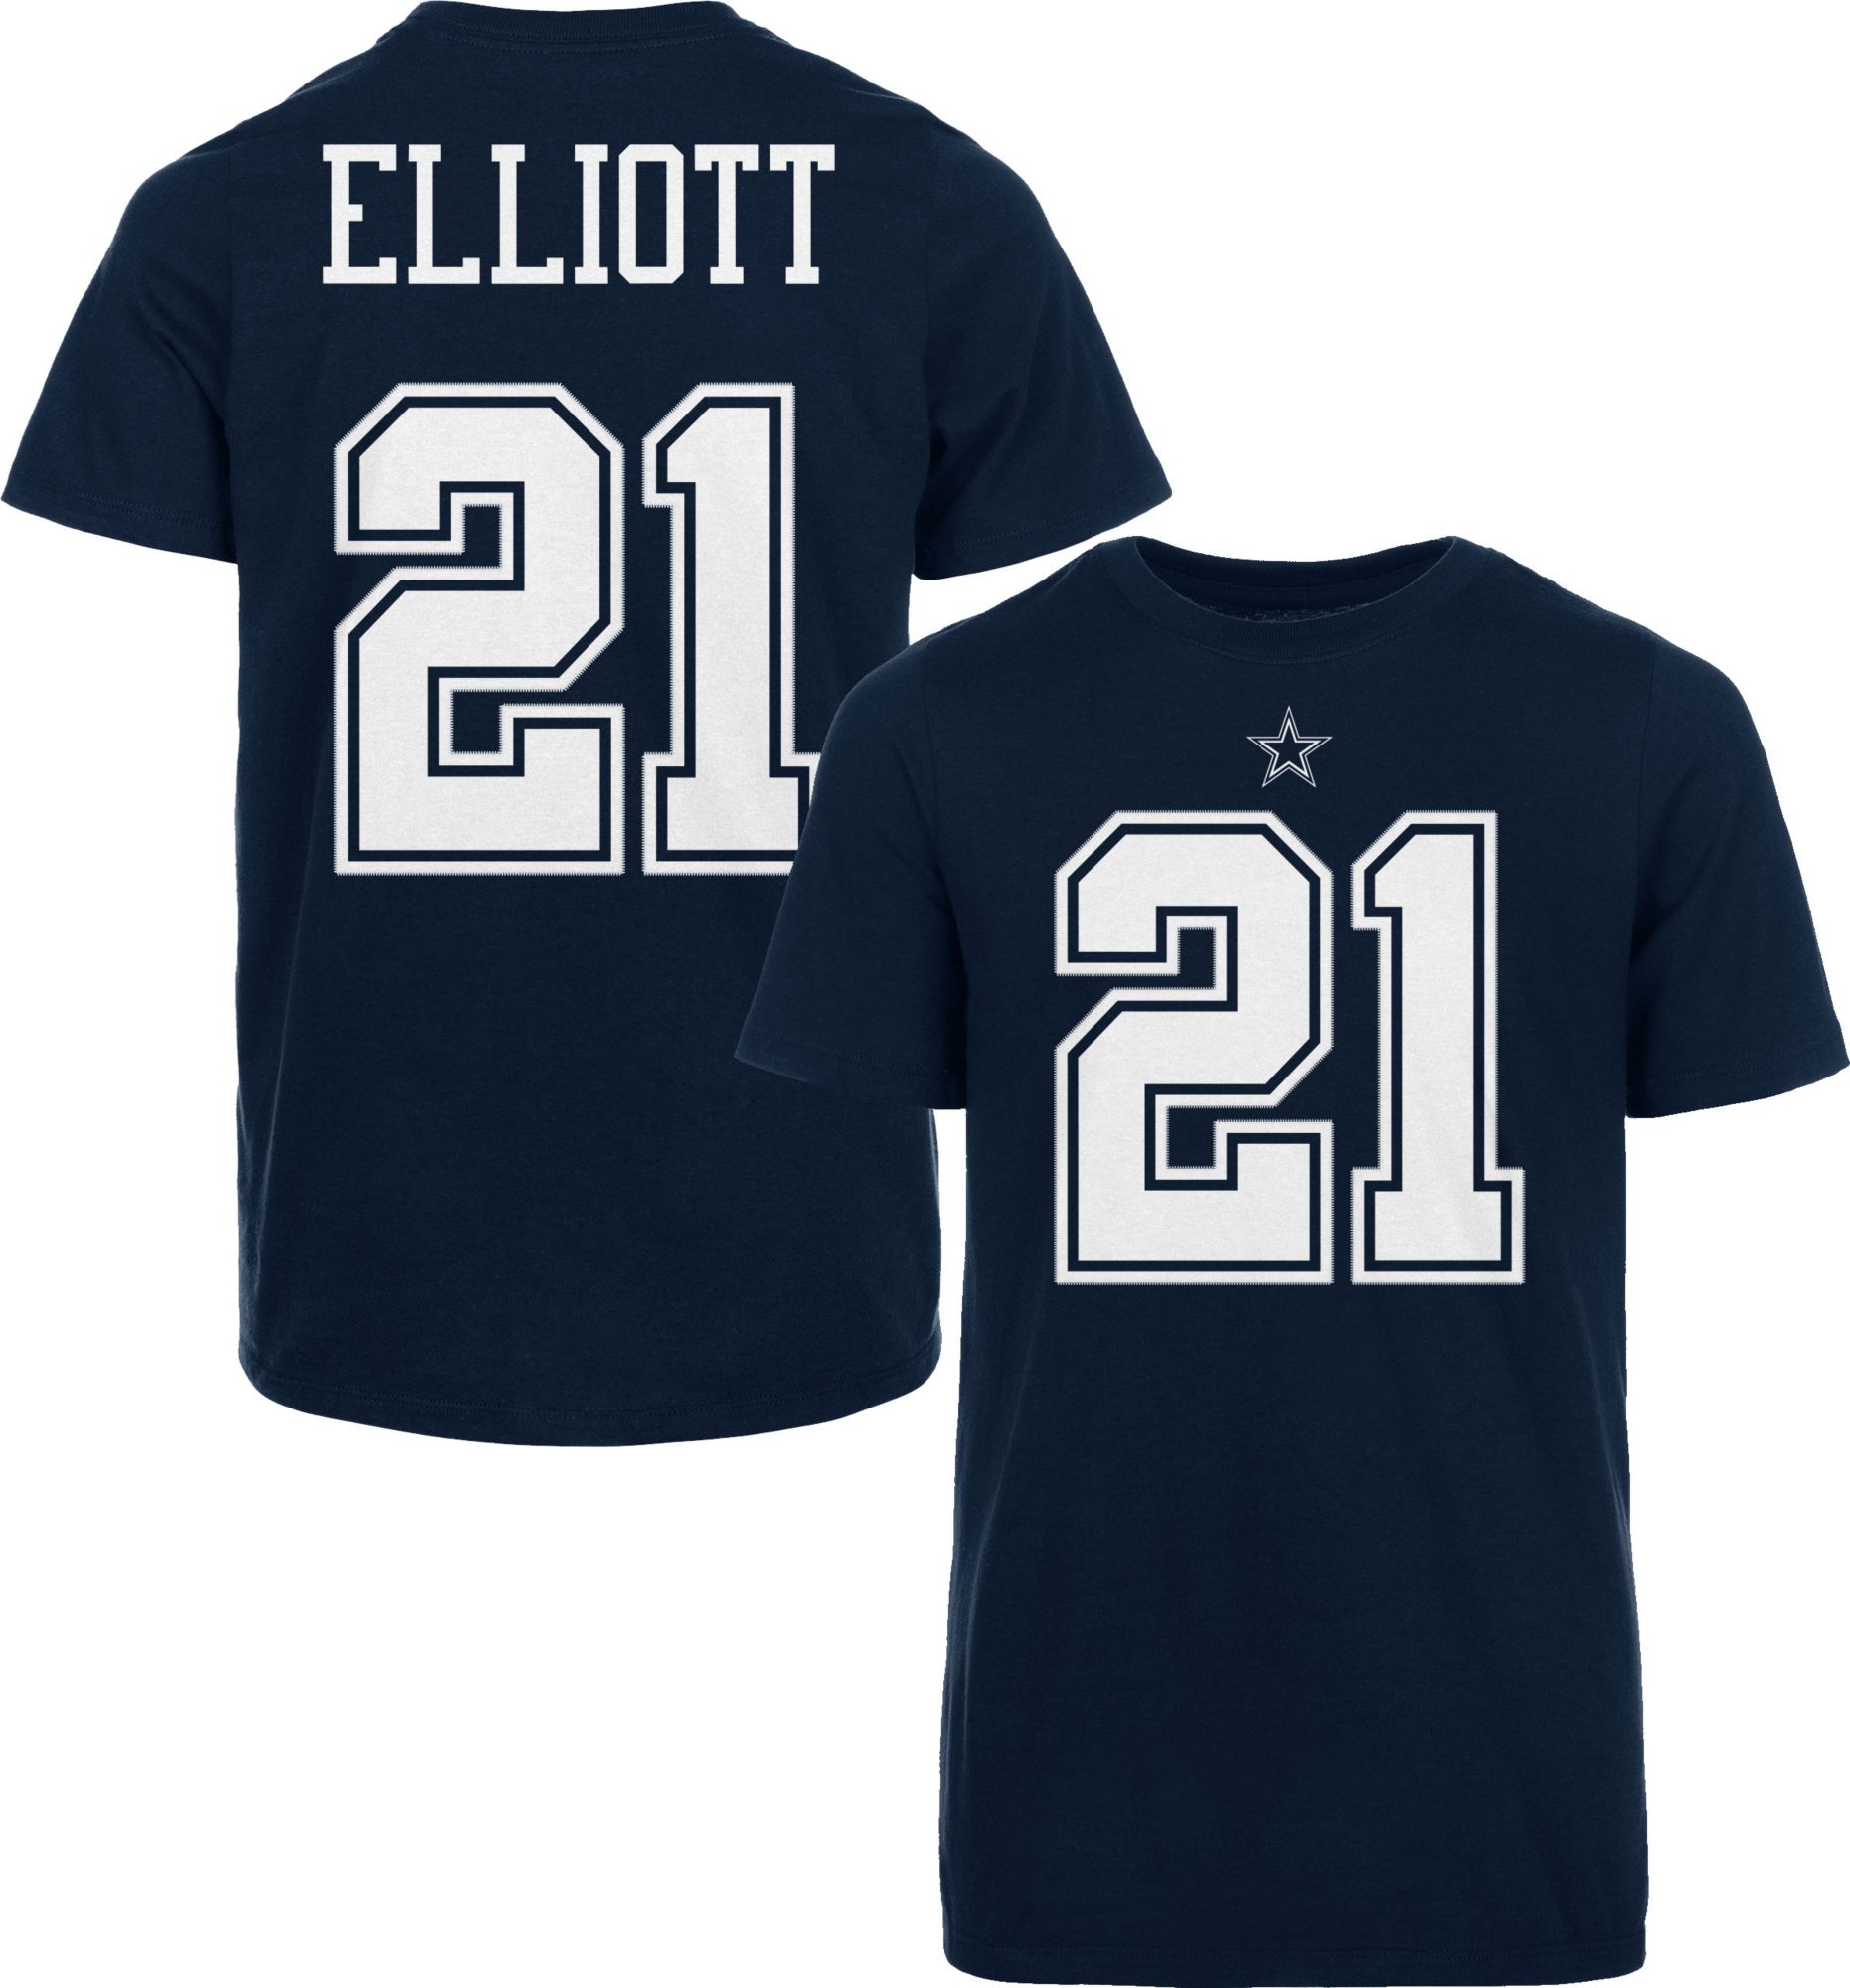 Nike / Youth Dallas Cowboys Ezekiel Elliott #21 Pride Navy T-Shirt